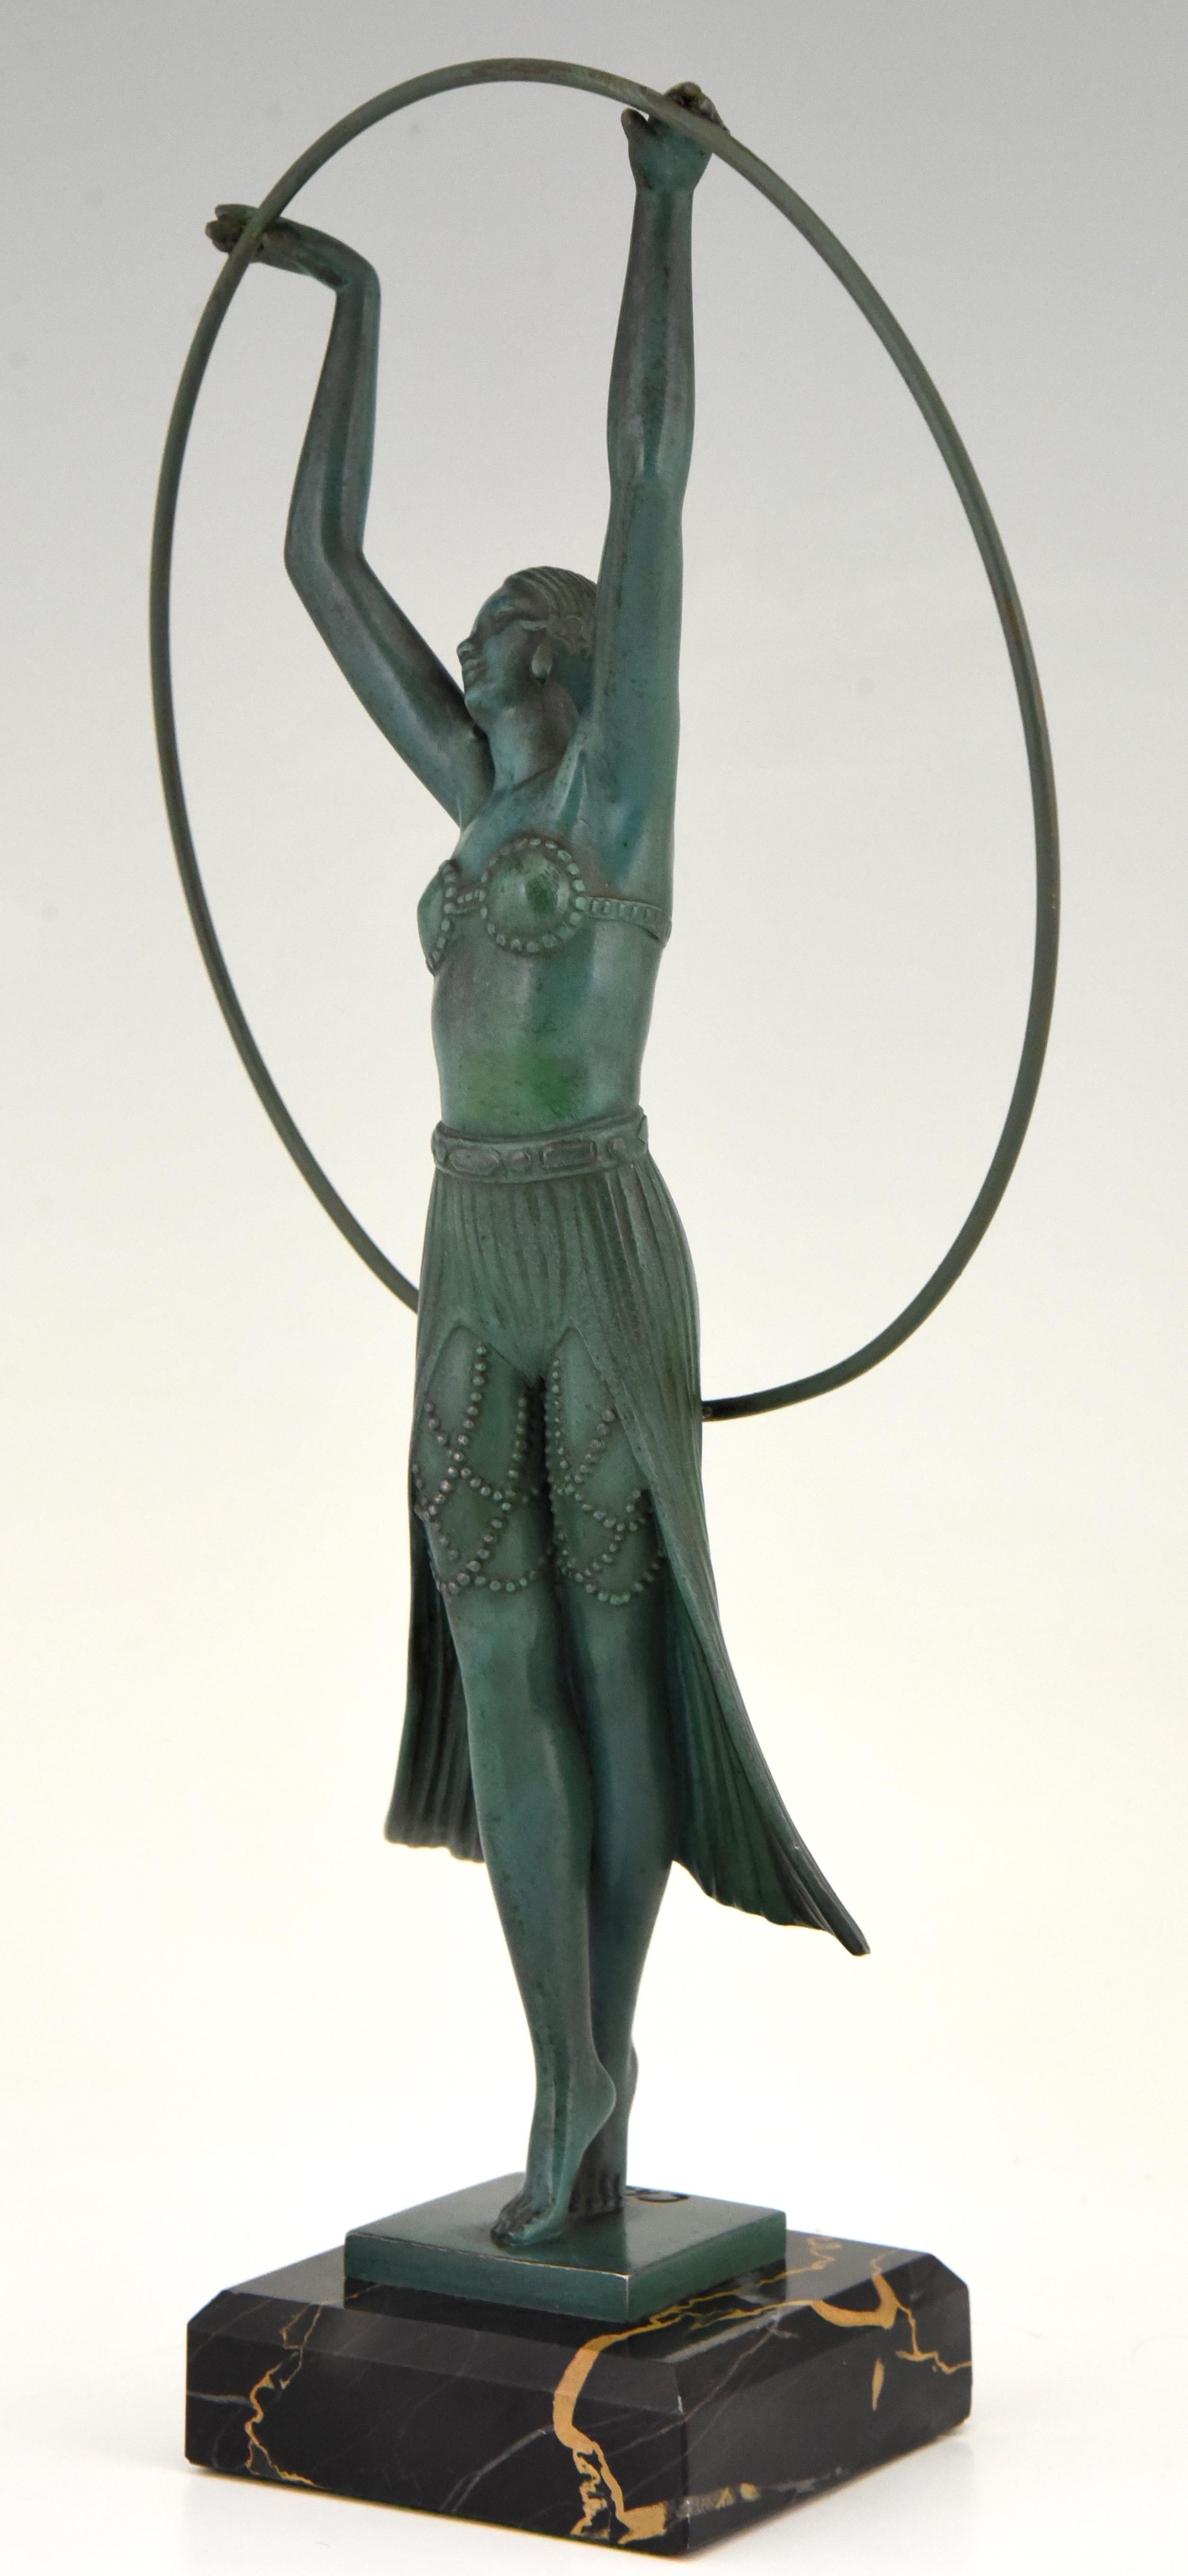 Metal Art Deco Sculpture Lady Hoop Dancer by Charles for Max Le Verrier, France, 1930